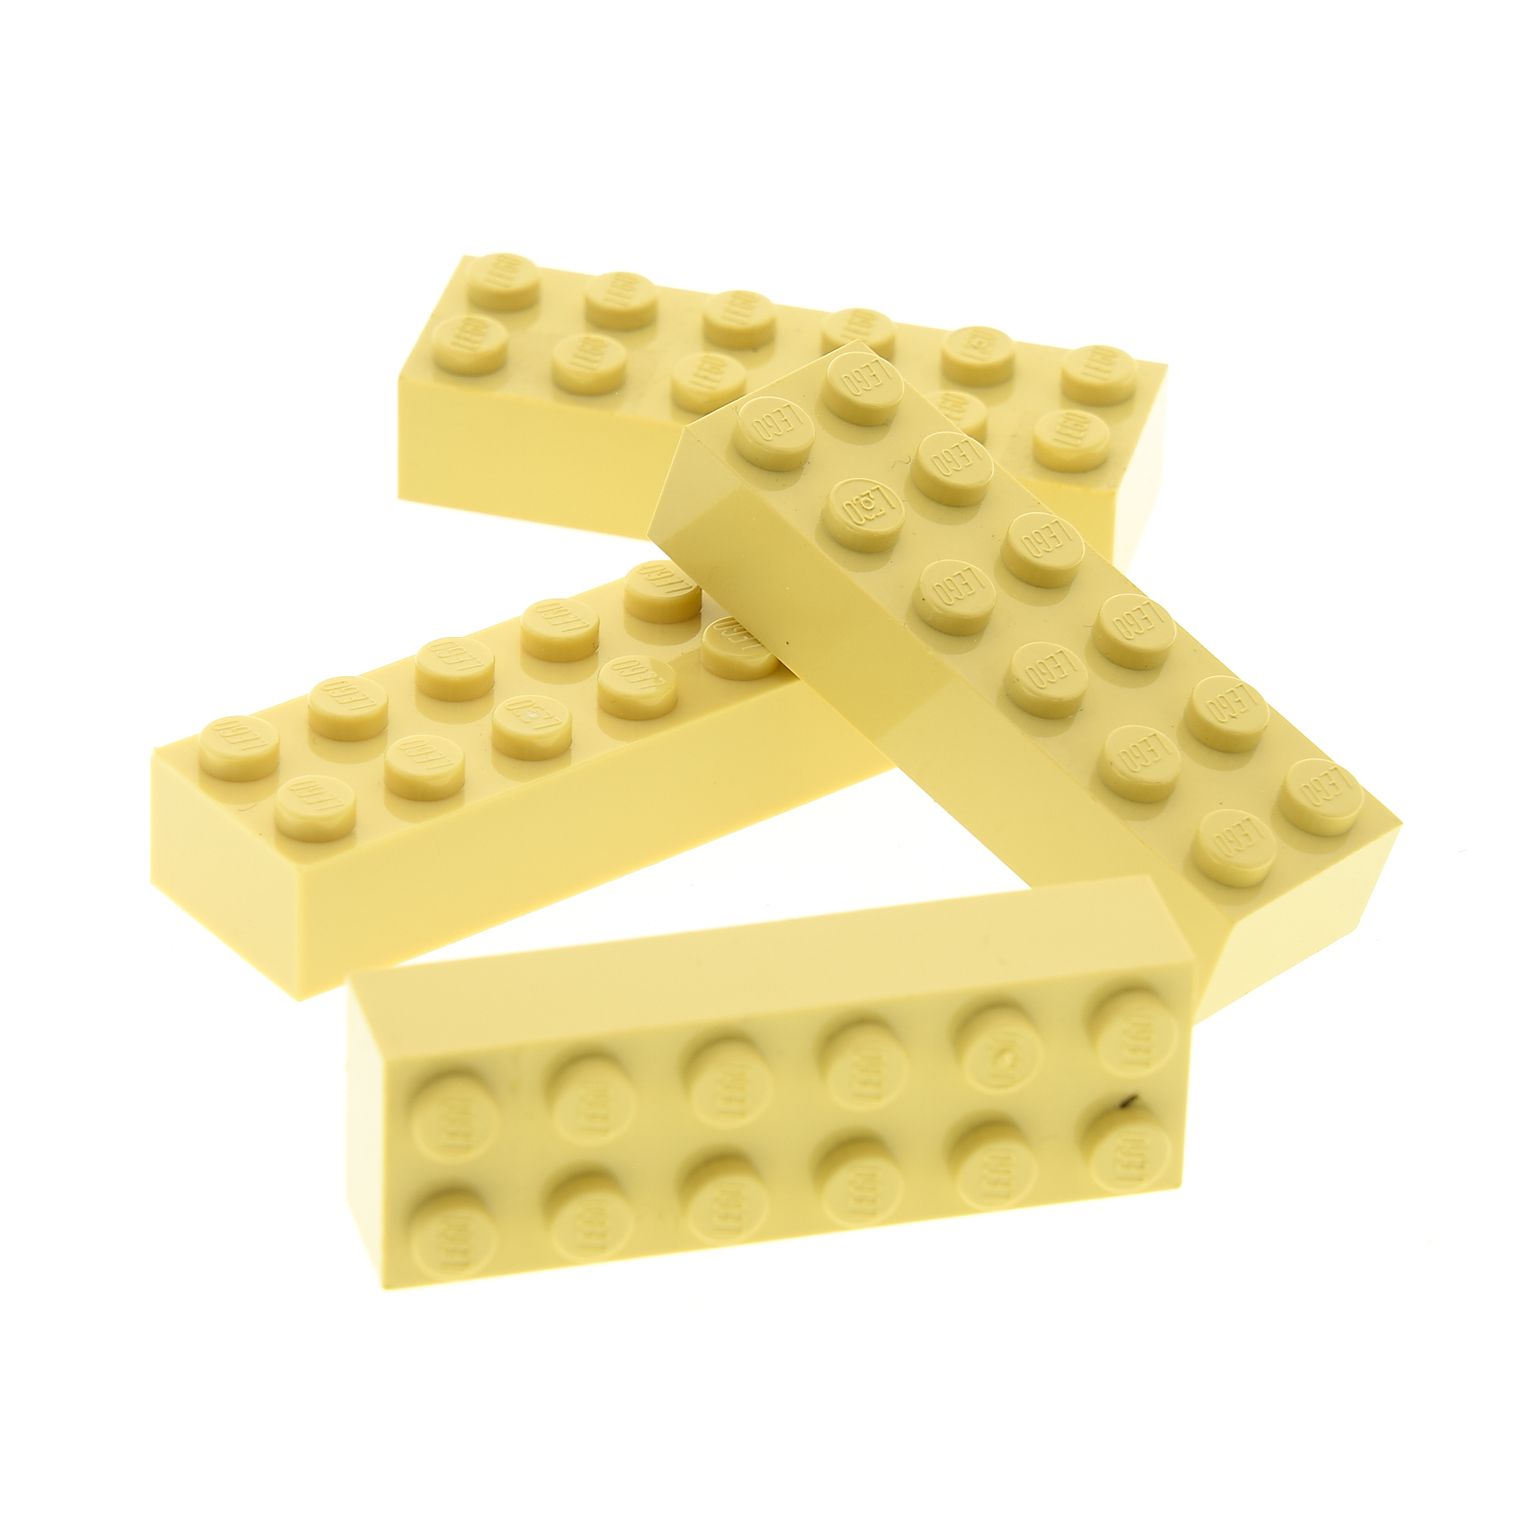 Lego 4 x Baustein Basic Stein 2456 beige tan    2x6 